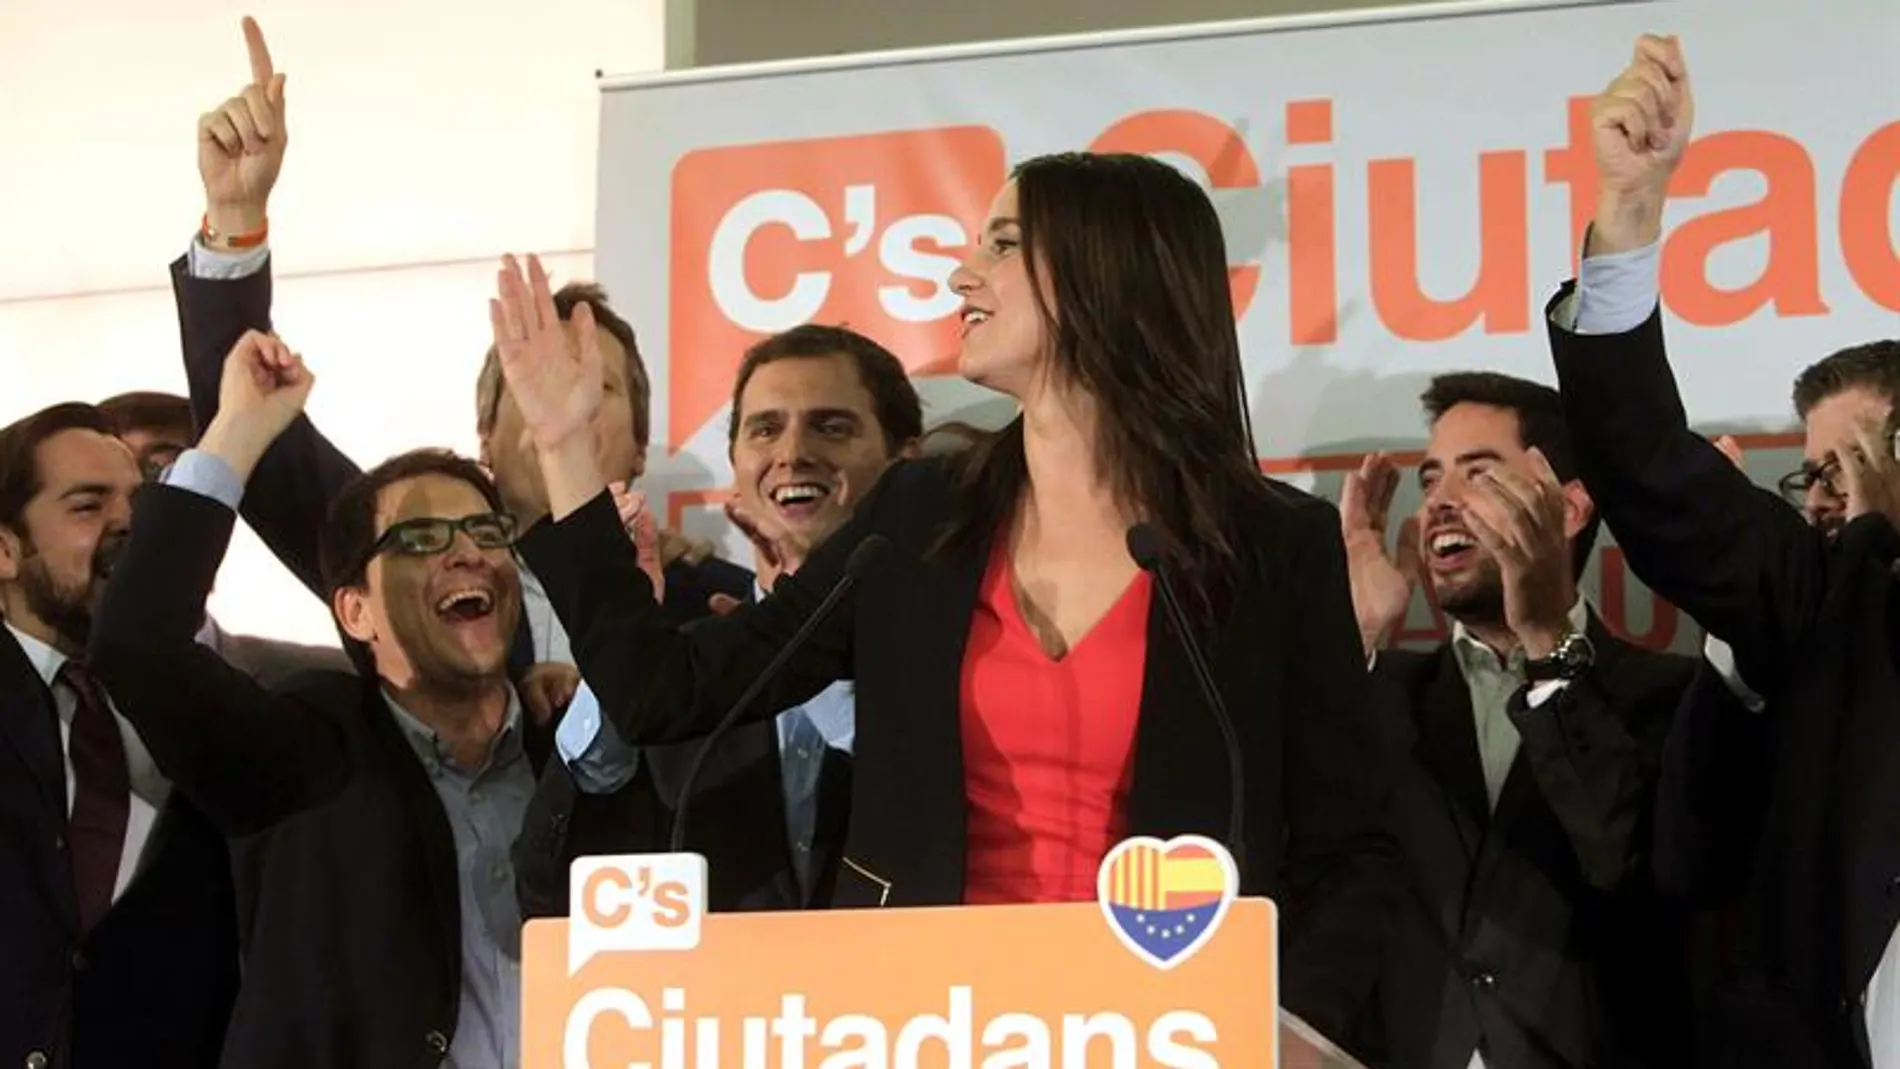  La candidata a la presidencia de la Generalitat por Ciutadans, Inés Arrimadas